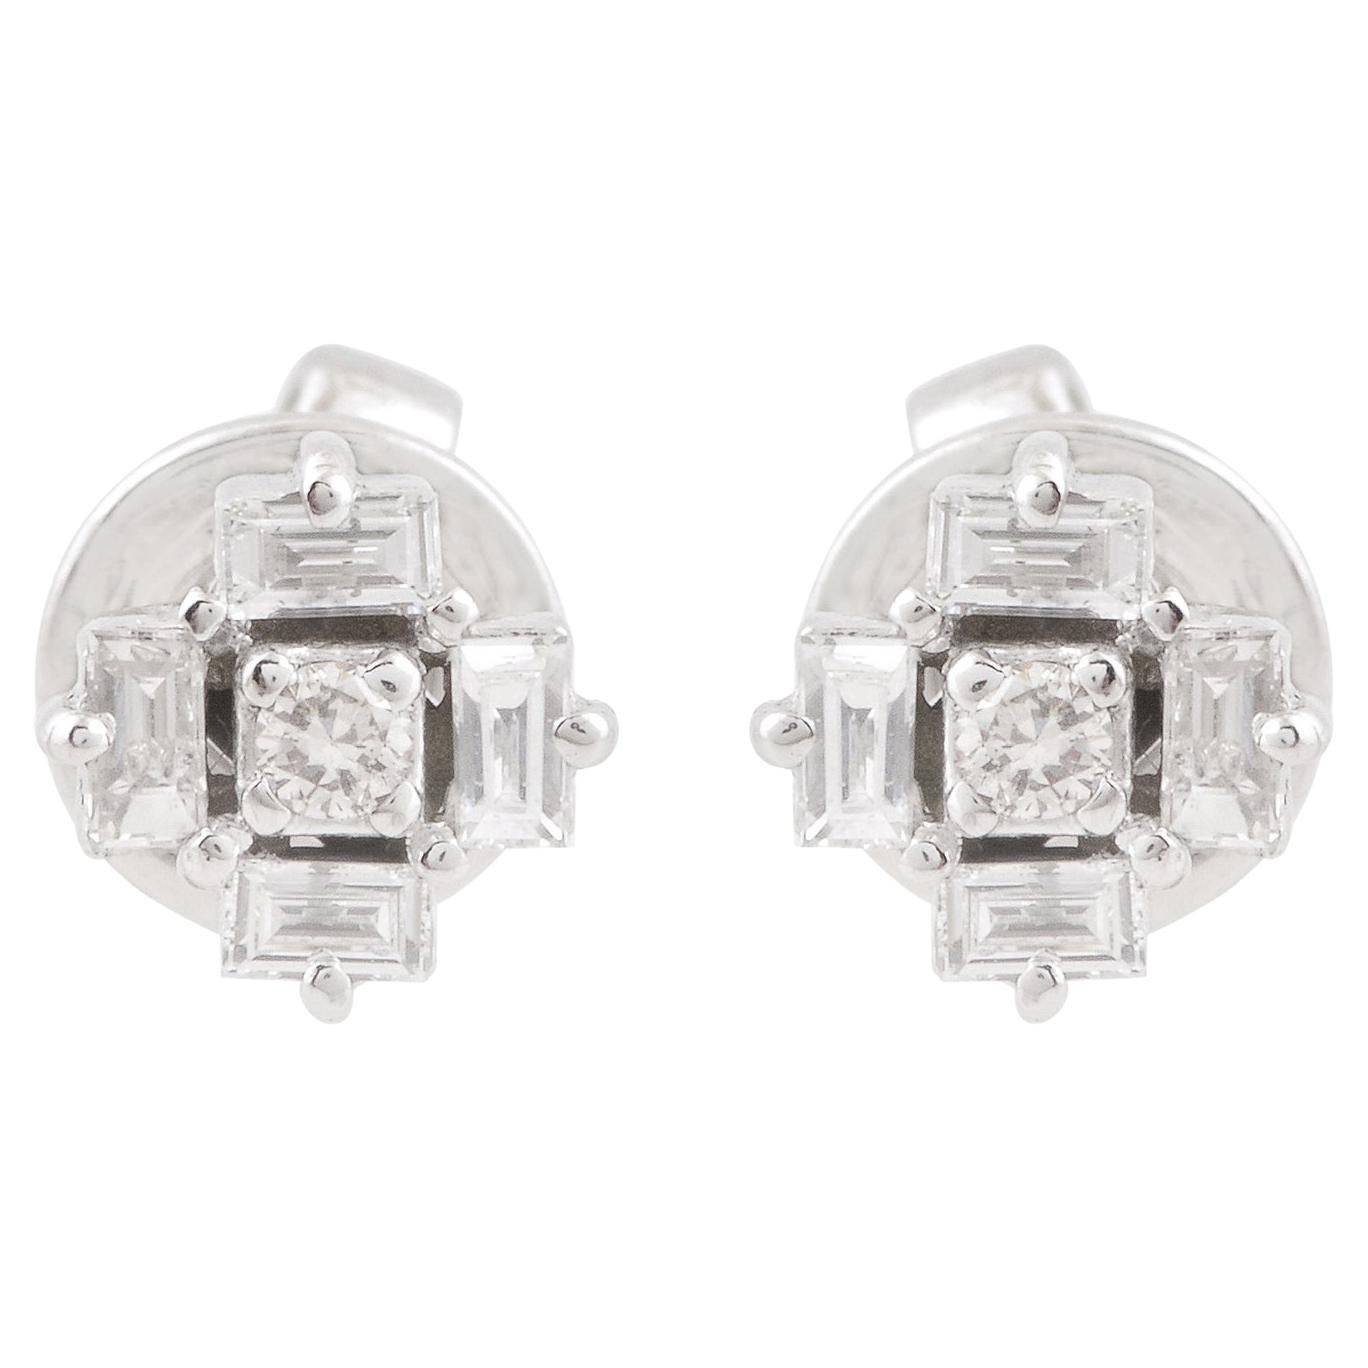 0.18 Carat SI Clarity HI Color Baguette Diamond Stud Earrings 10k White Gold